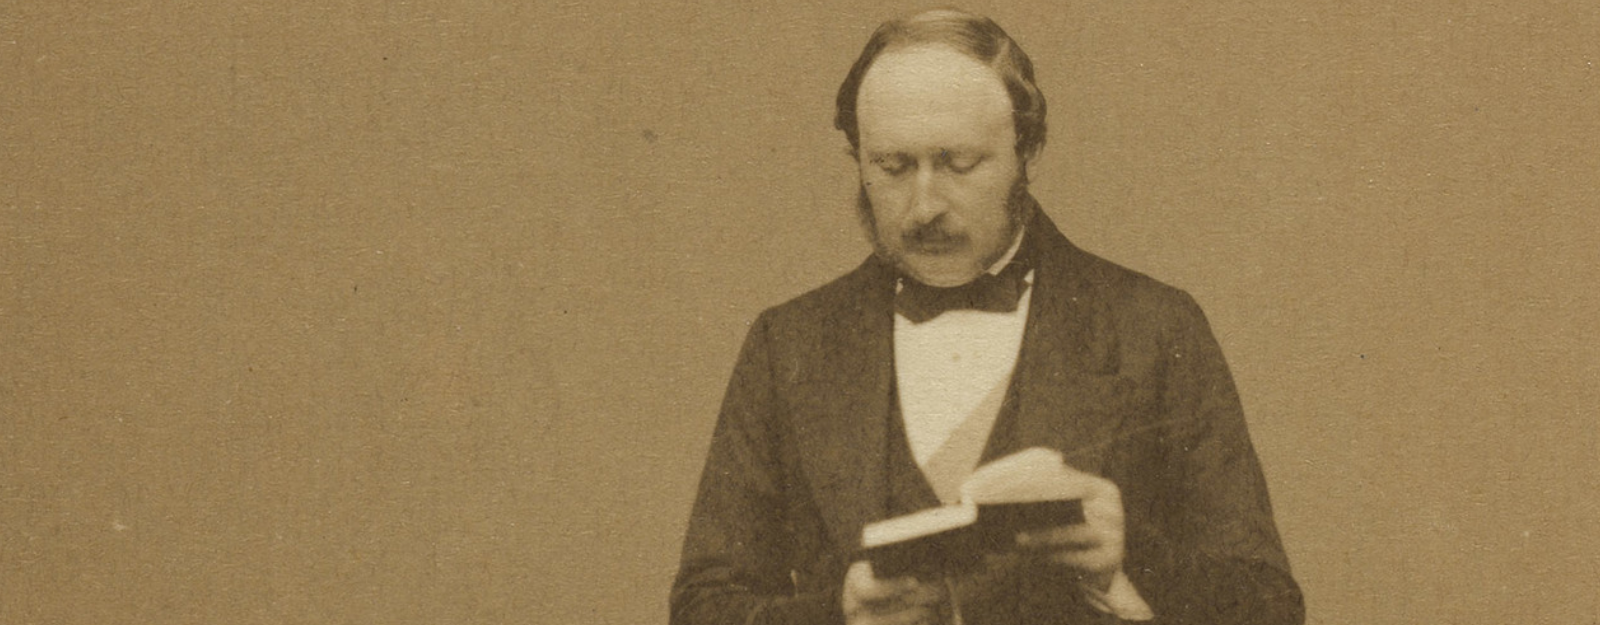 Photograph of Prince Albert reading